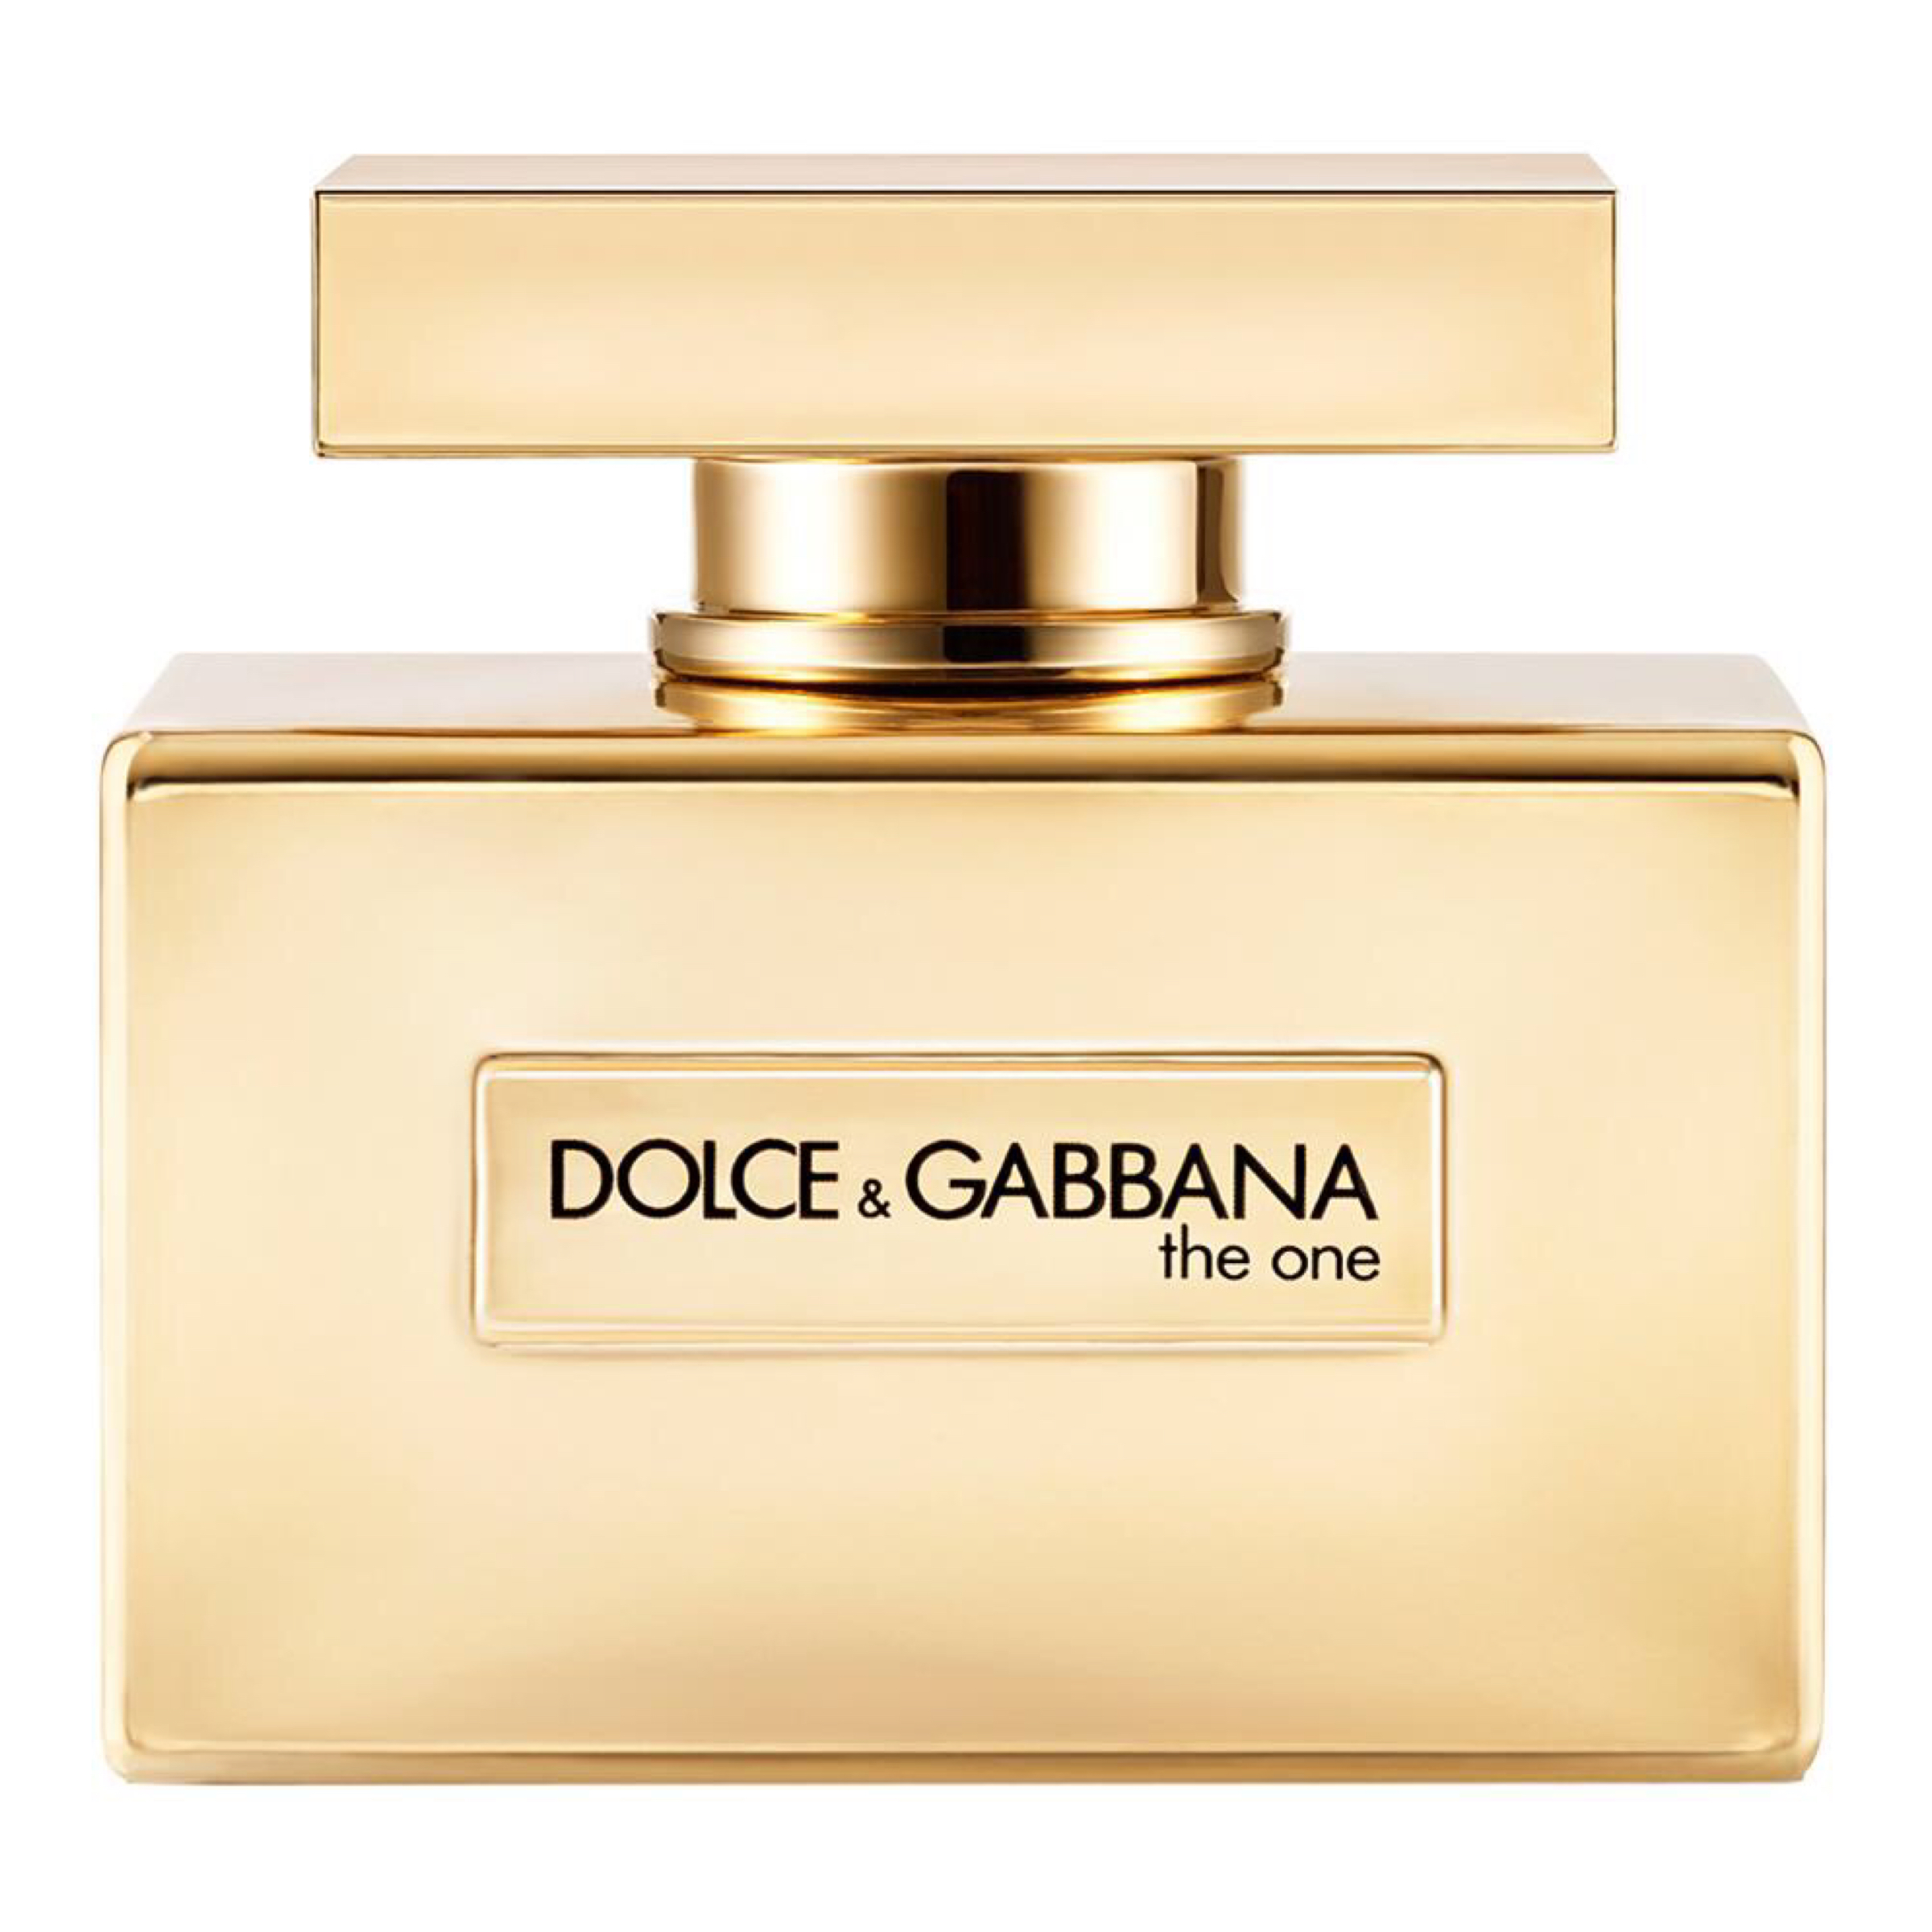 Купить дольче габбана ван. Dolce Gabbana the one Gold intense. Dolce Gabbana the one Gold Limited Edition. Dolce Gabbana the one Gold intense женские. Дольче Габбана the one Gold intense.